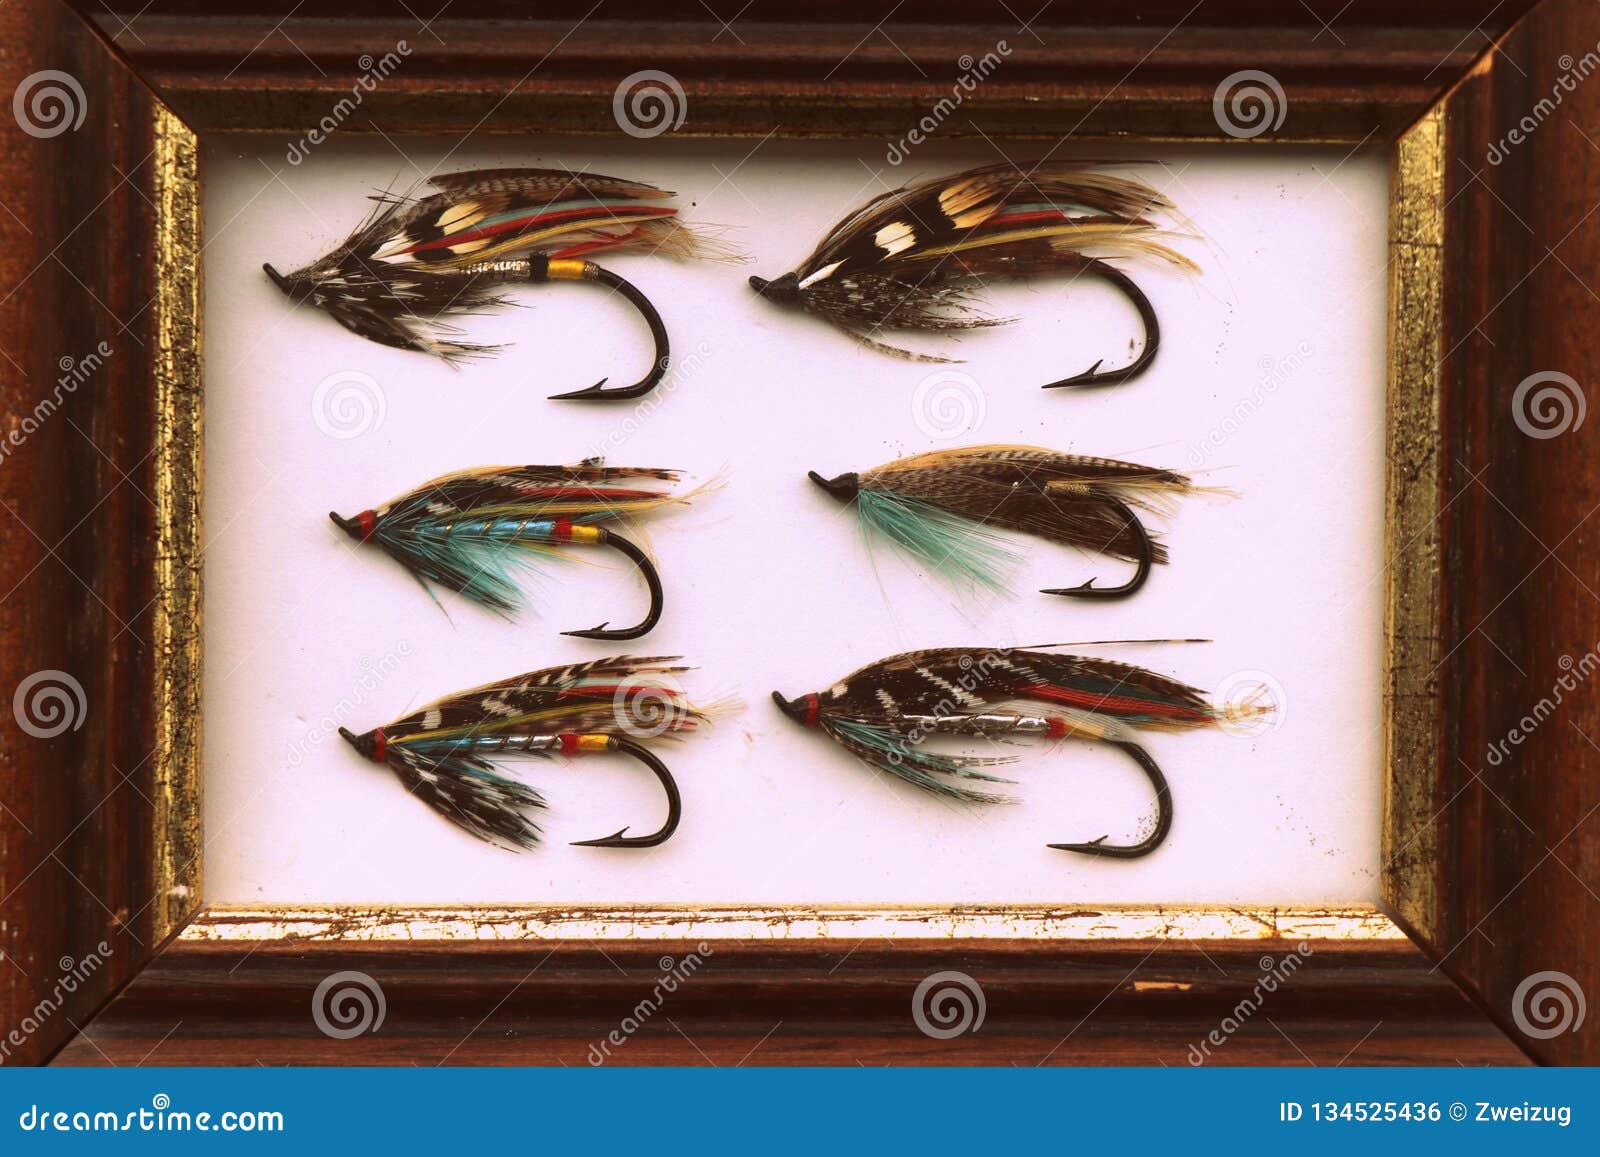 https://thumbs.dreamstime.com/z/beautiful-vintage-fully-dressed-salmon-flies-were-once-used-fly-fishing-atlantic-salmon-vintage-classic-salmon-flies-134525436.jpg